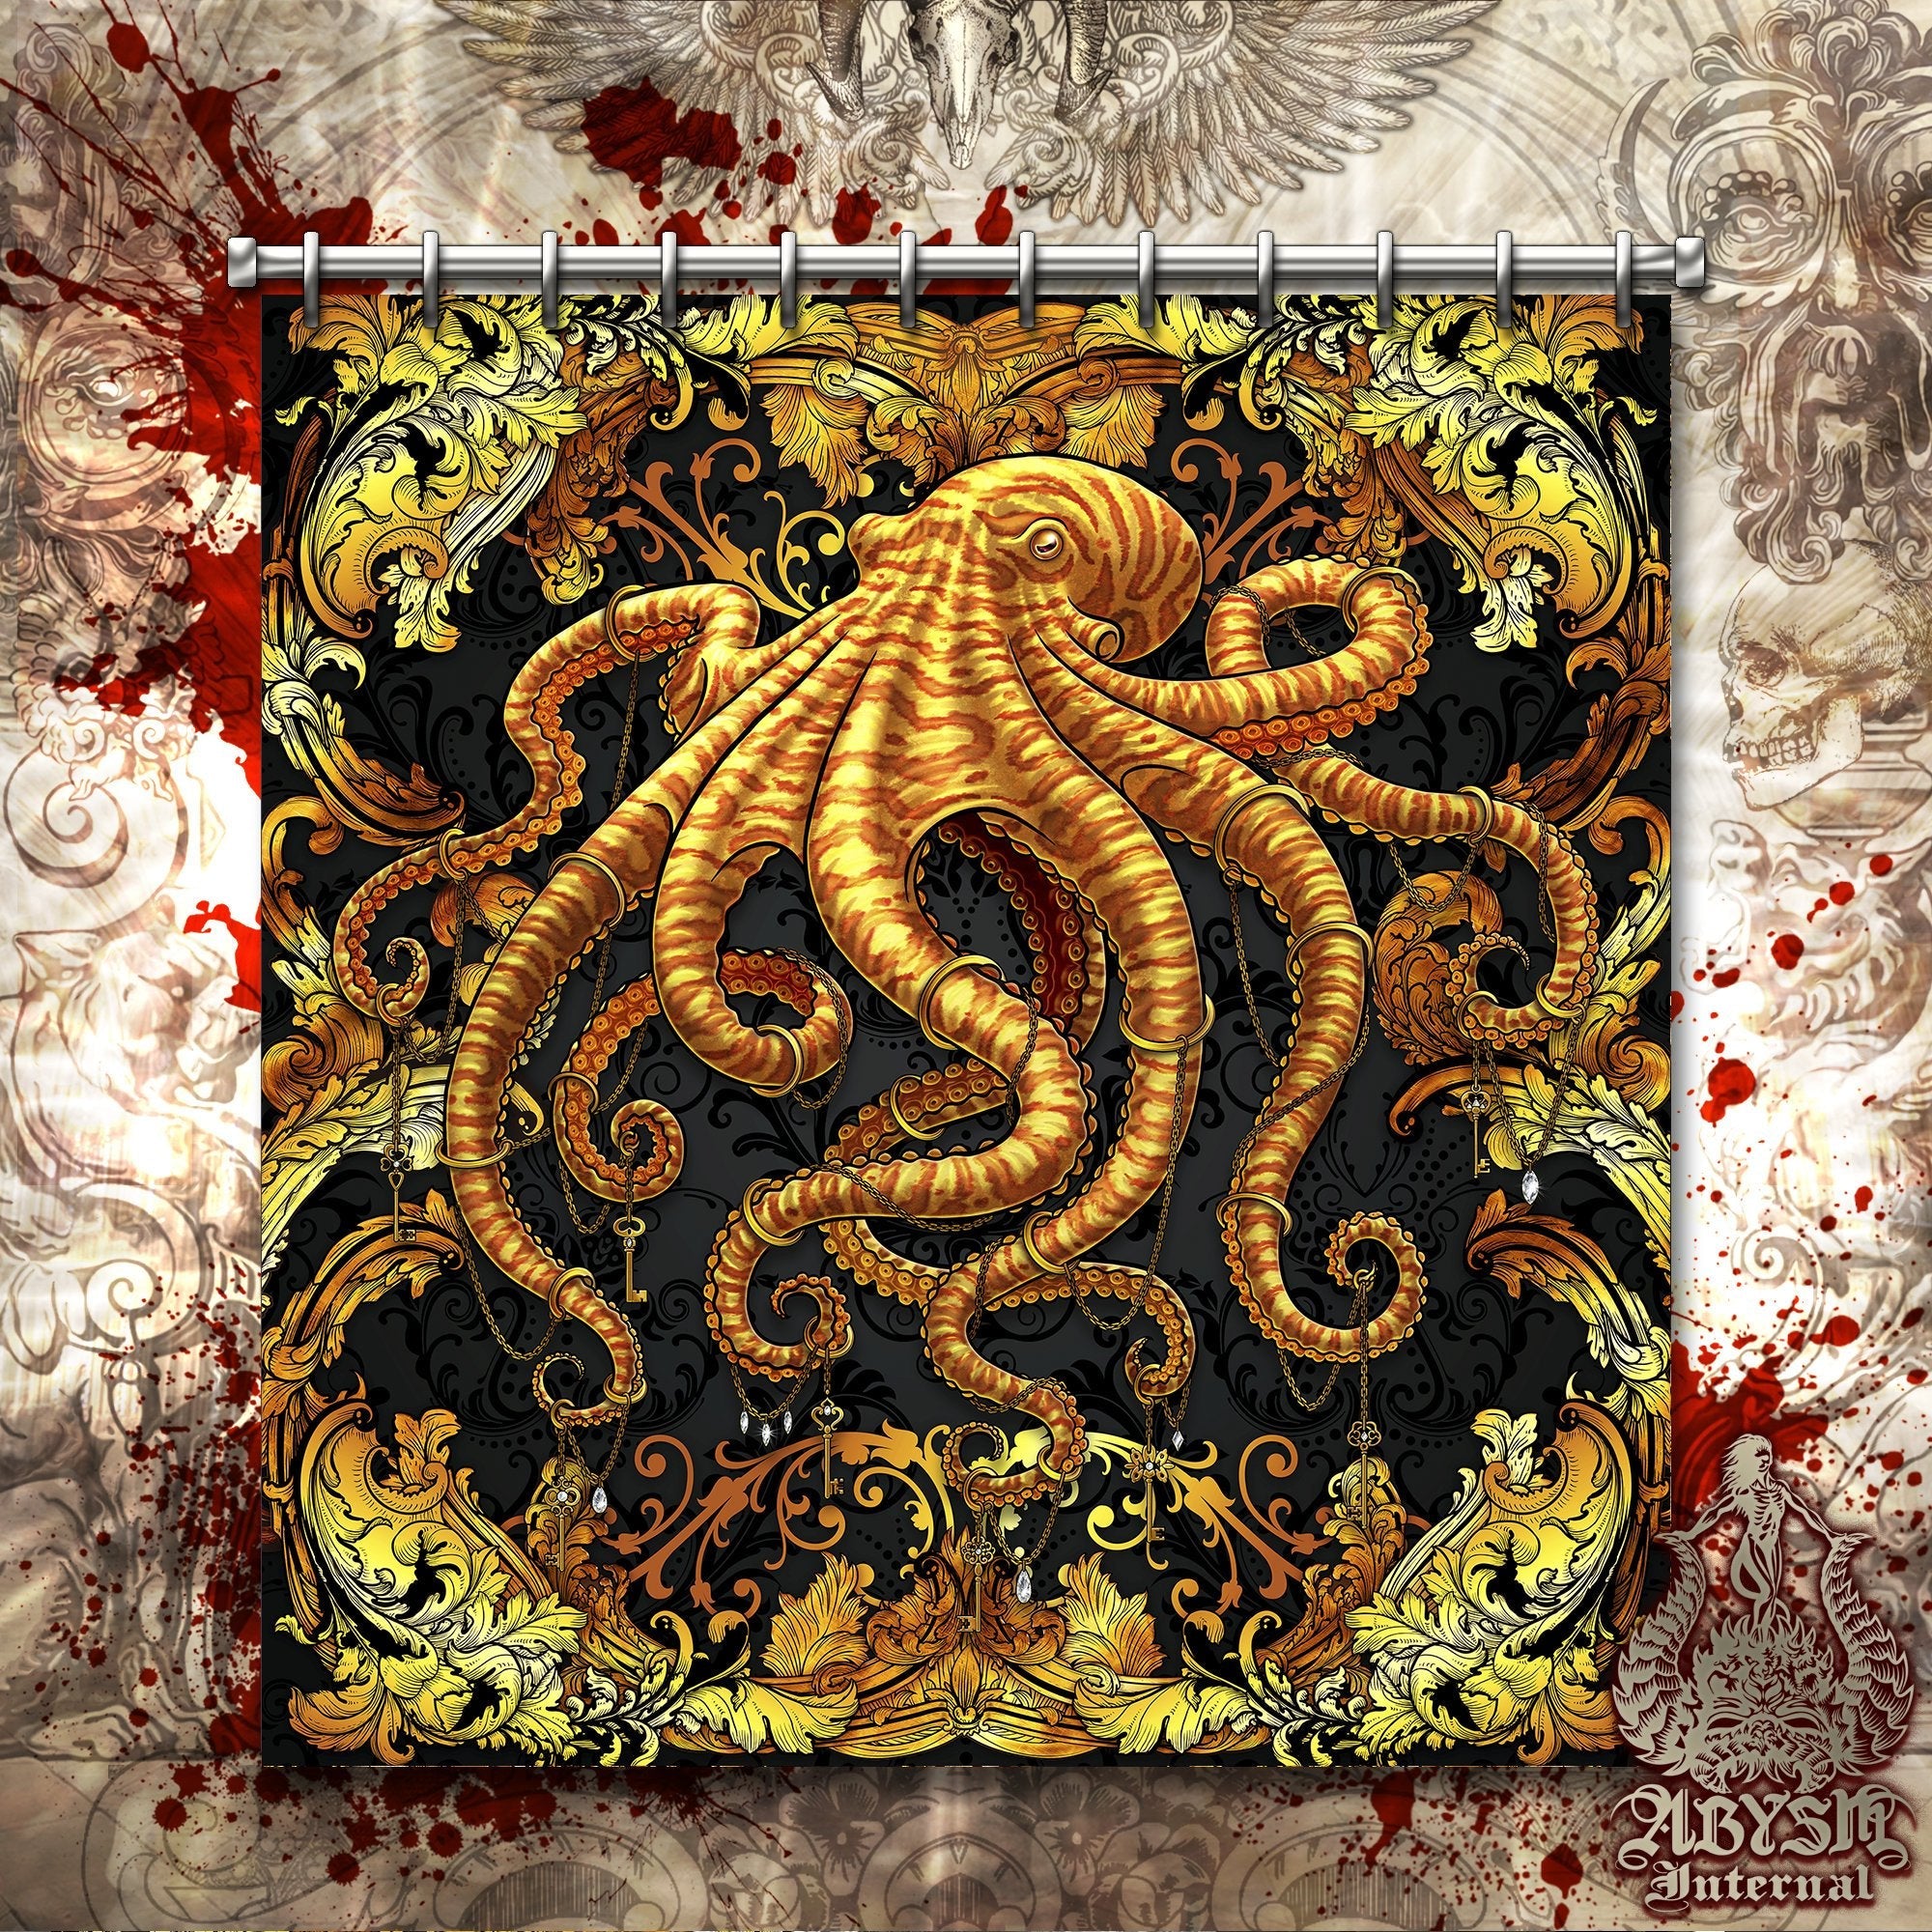 Octopus Shower Curtain, Beach Bathroom Decor - Gold & Black - Abysm Internal